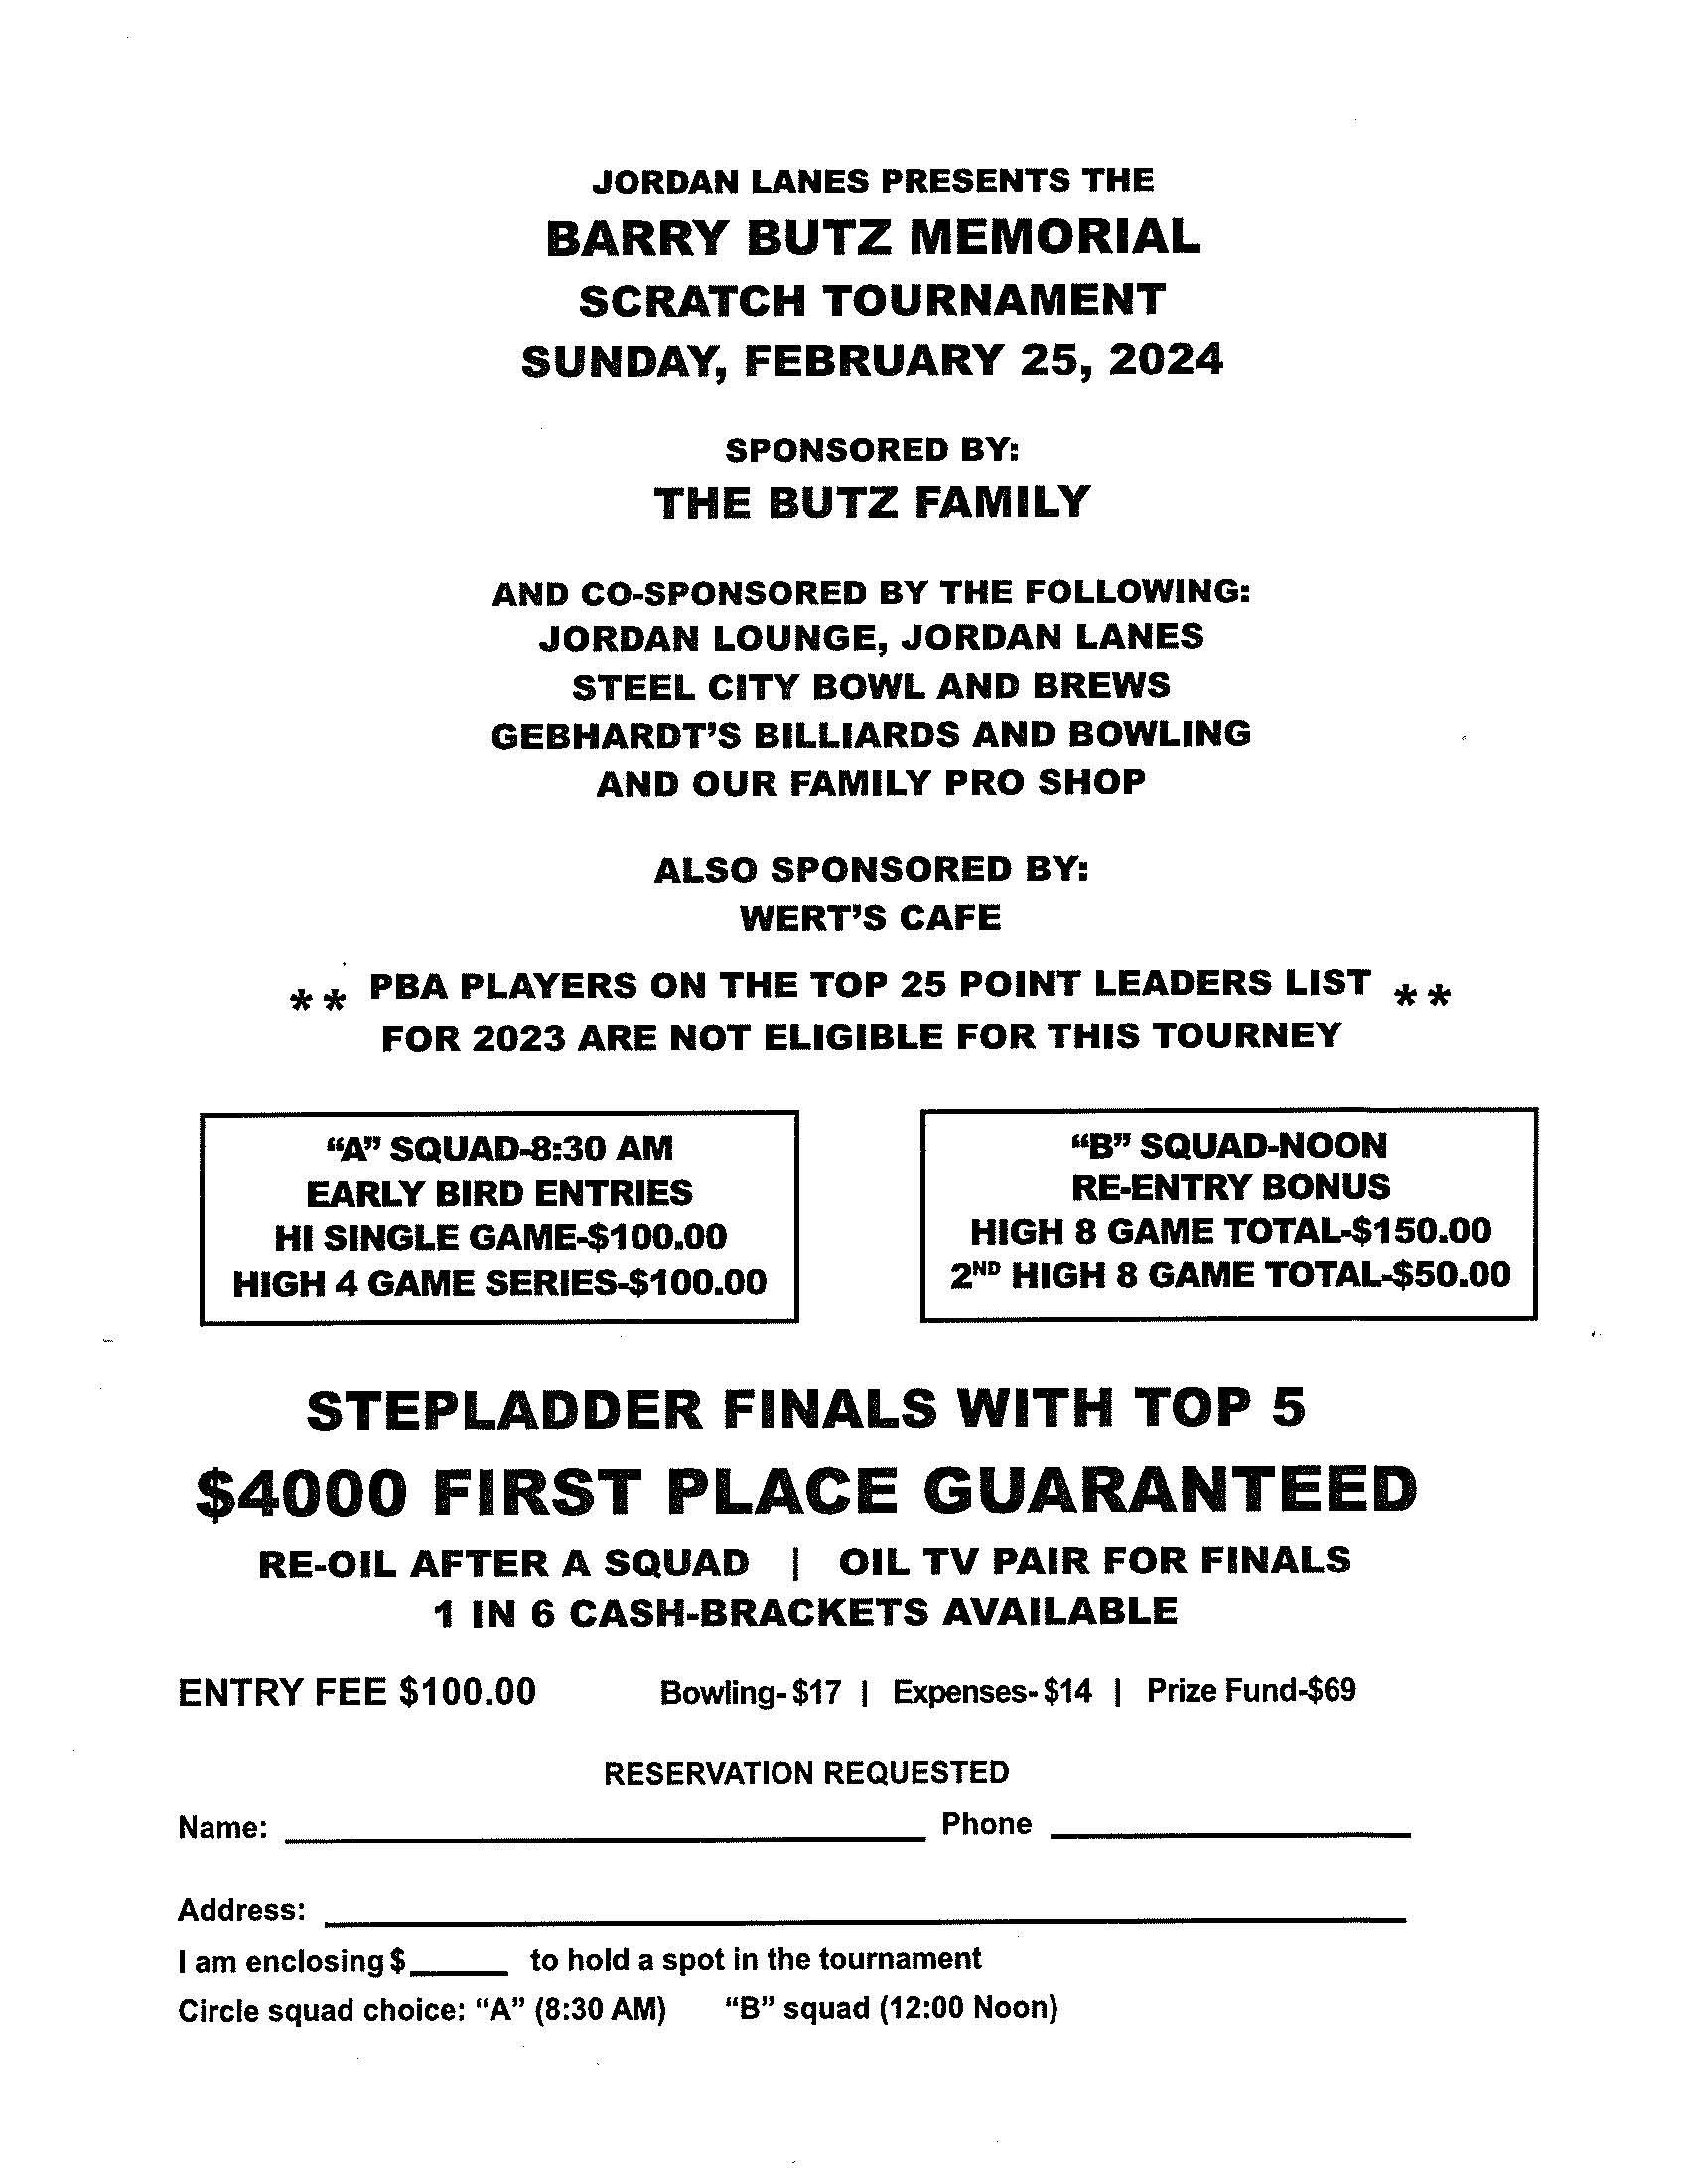 Barry Butz Memorial Scratch Tournament @ The New Jordan Lanes